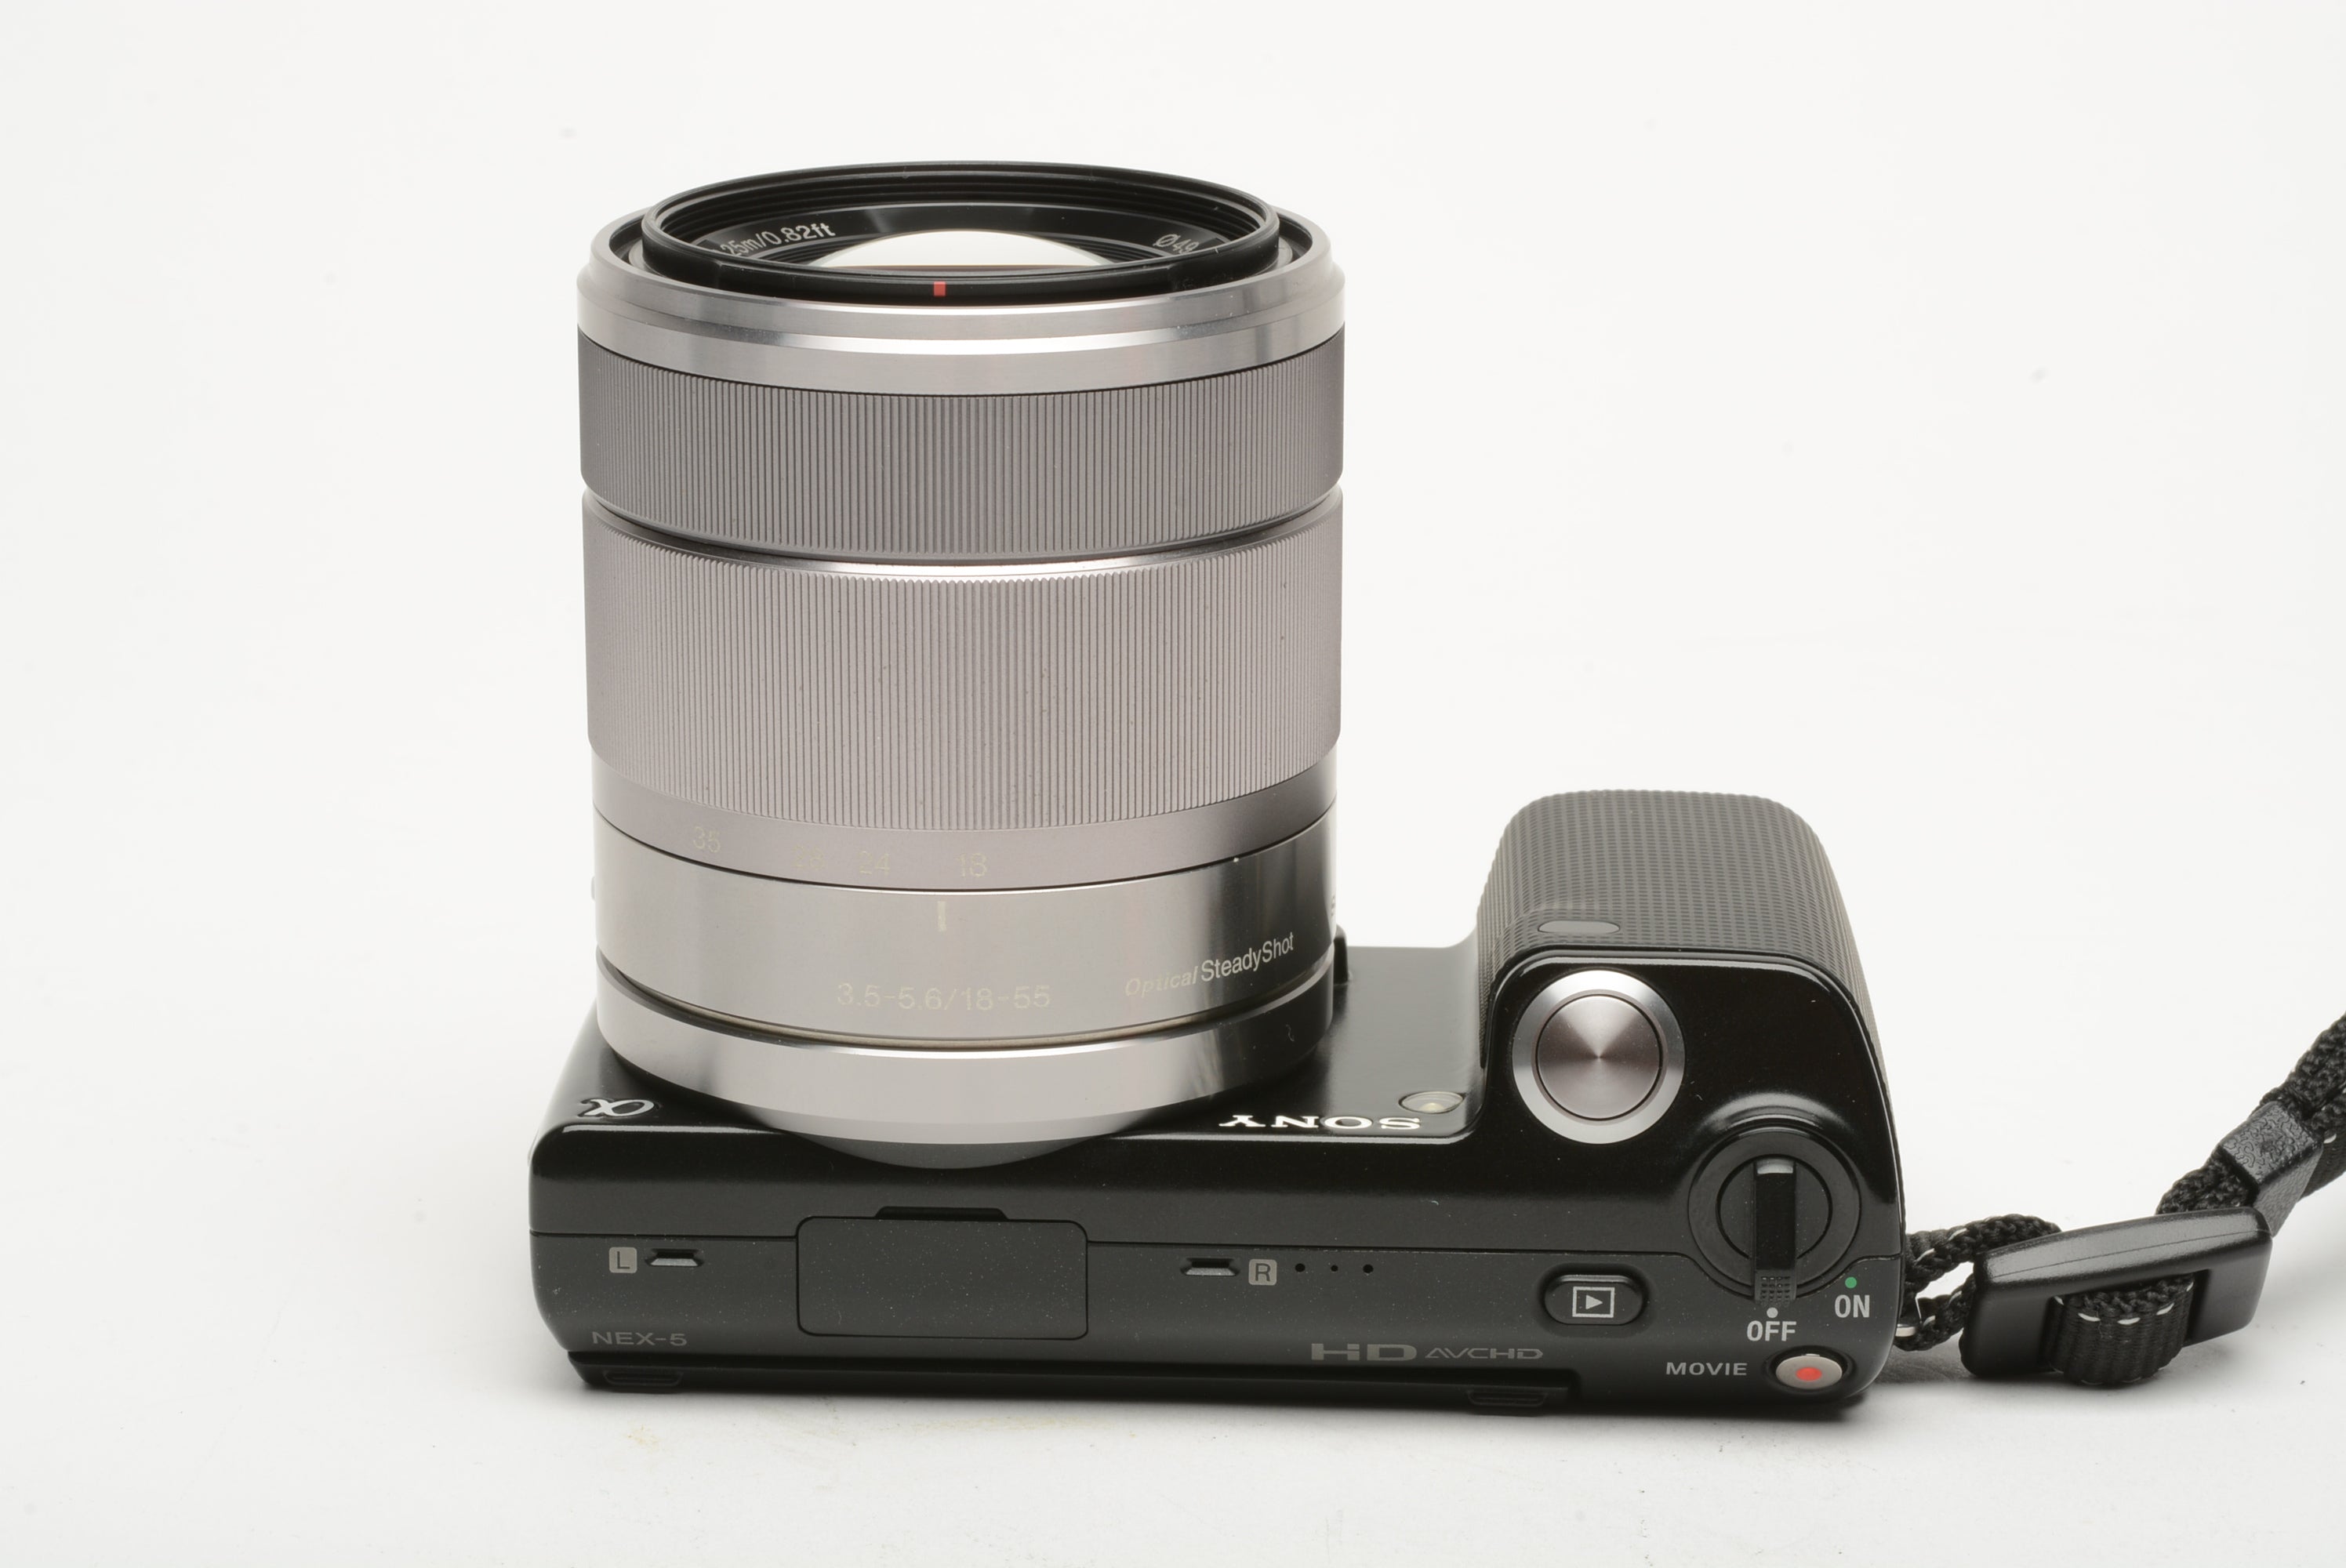 Sony NEX 5 black body w/18-55mm f3.5-5.6 zoom silver lens, batt+